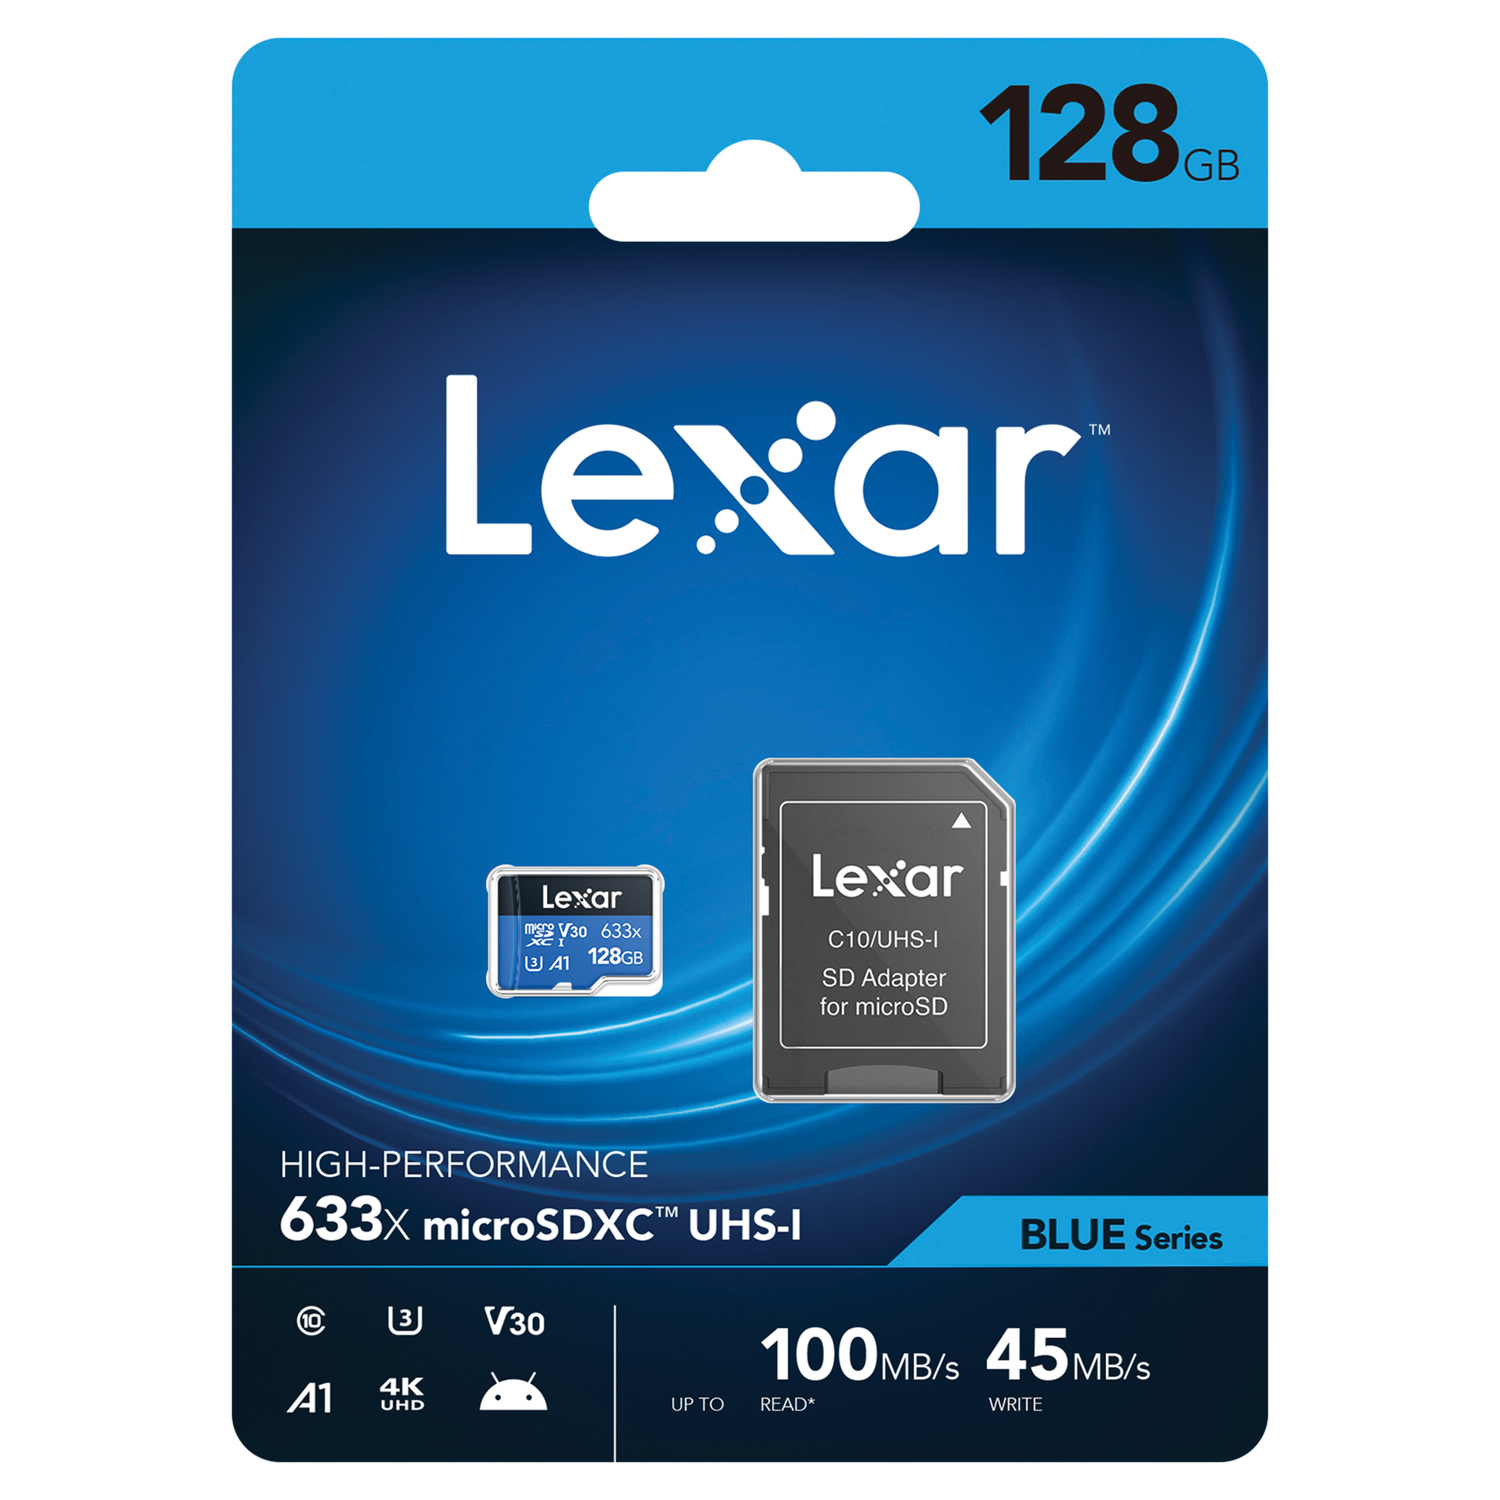 Lexar LSDMI128BBNL633A High-Performance BLUE Series 633x microSDHC/microSDXC UHS-I Card (128 GB) - image 5 of 5